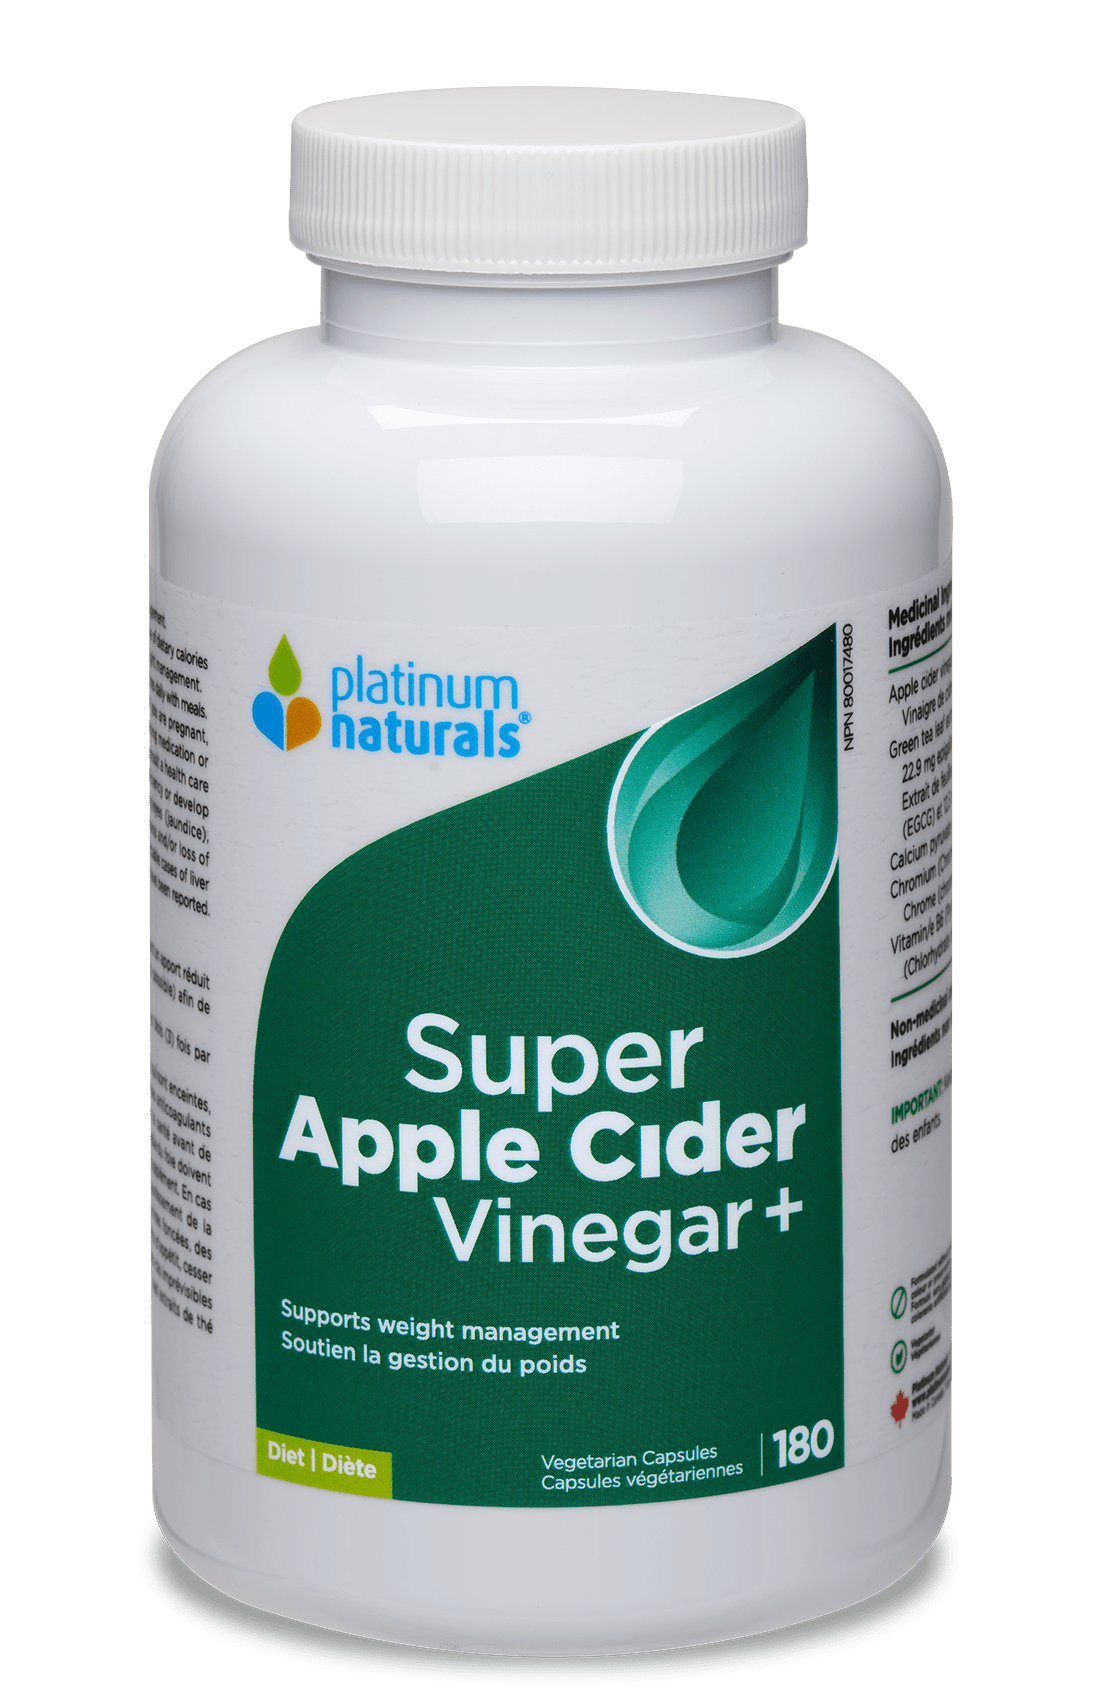 Super Apple Cider Vinegar+ Diet cg-dev-platinumnaturals 180 